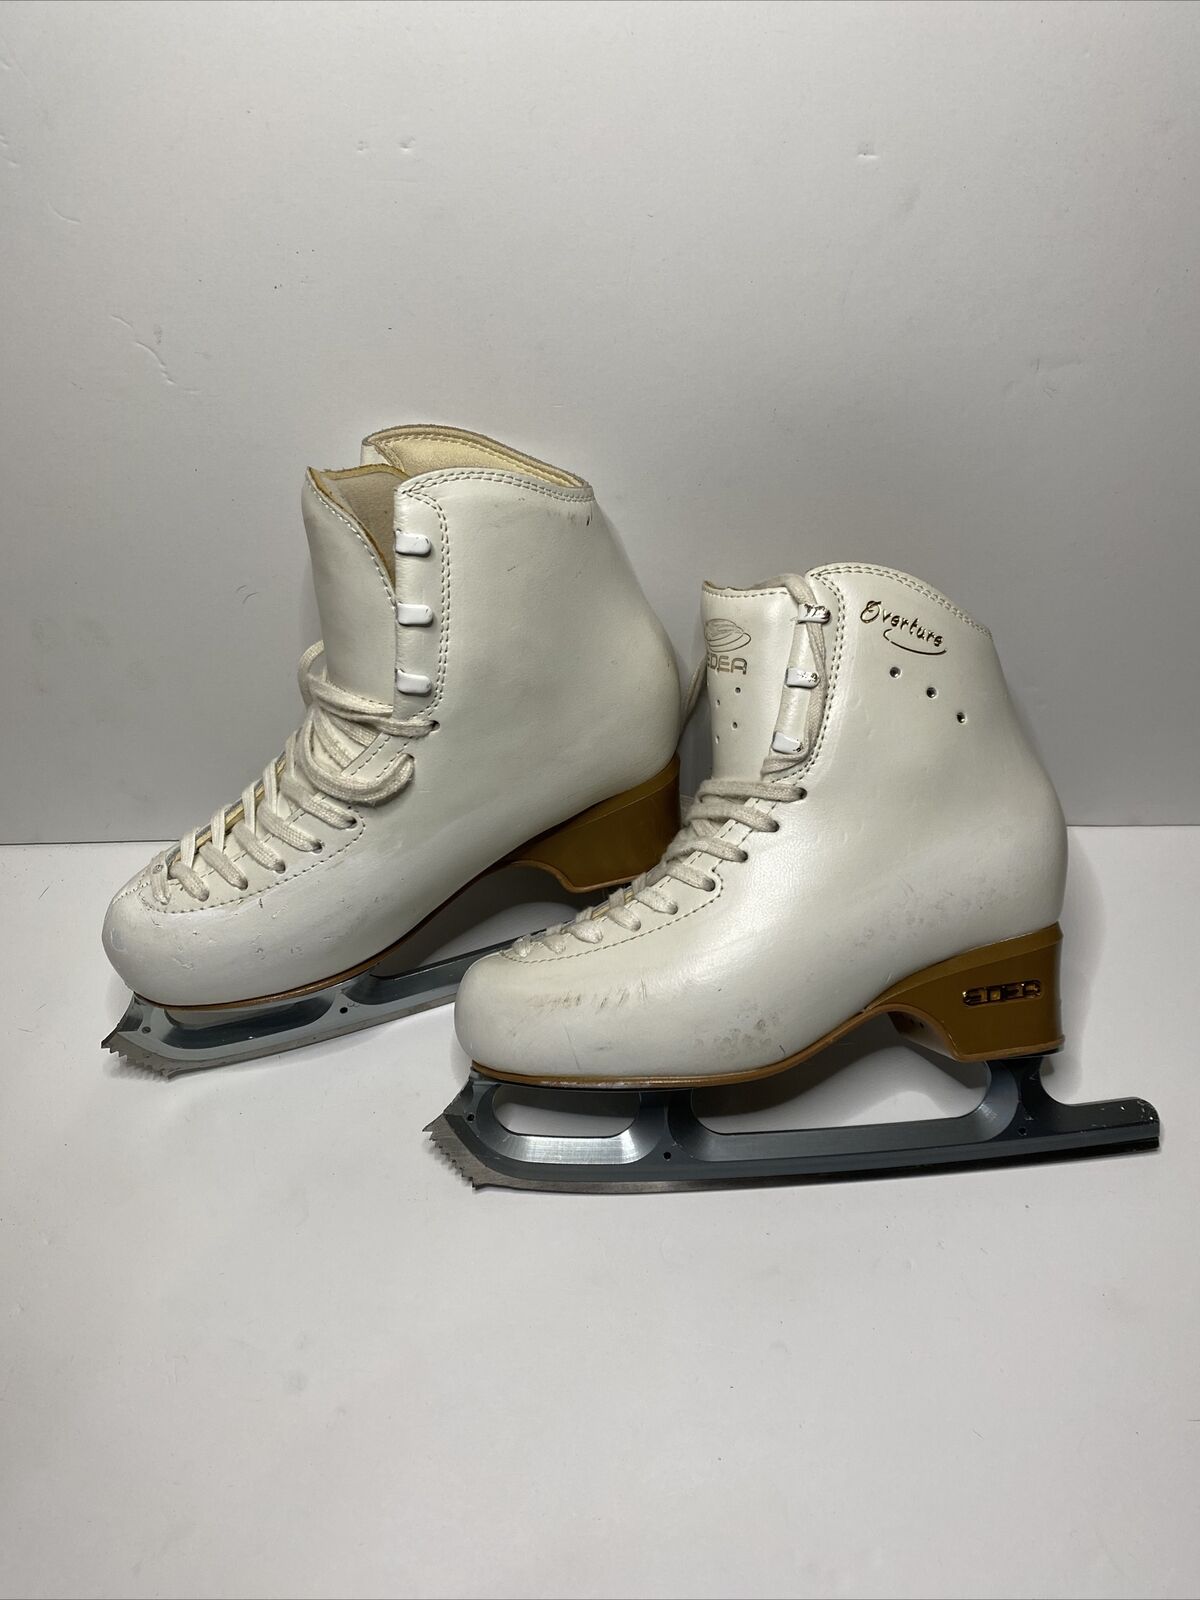 Edea Overture Ice Skates 230 Beautiful Crafted, Minimal Use, Make Offers